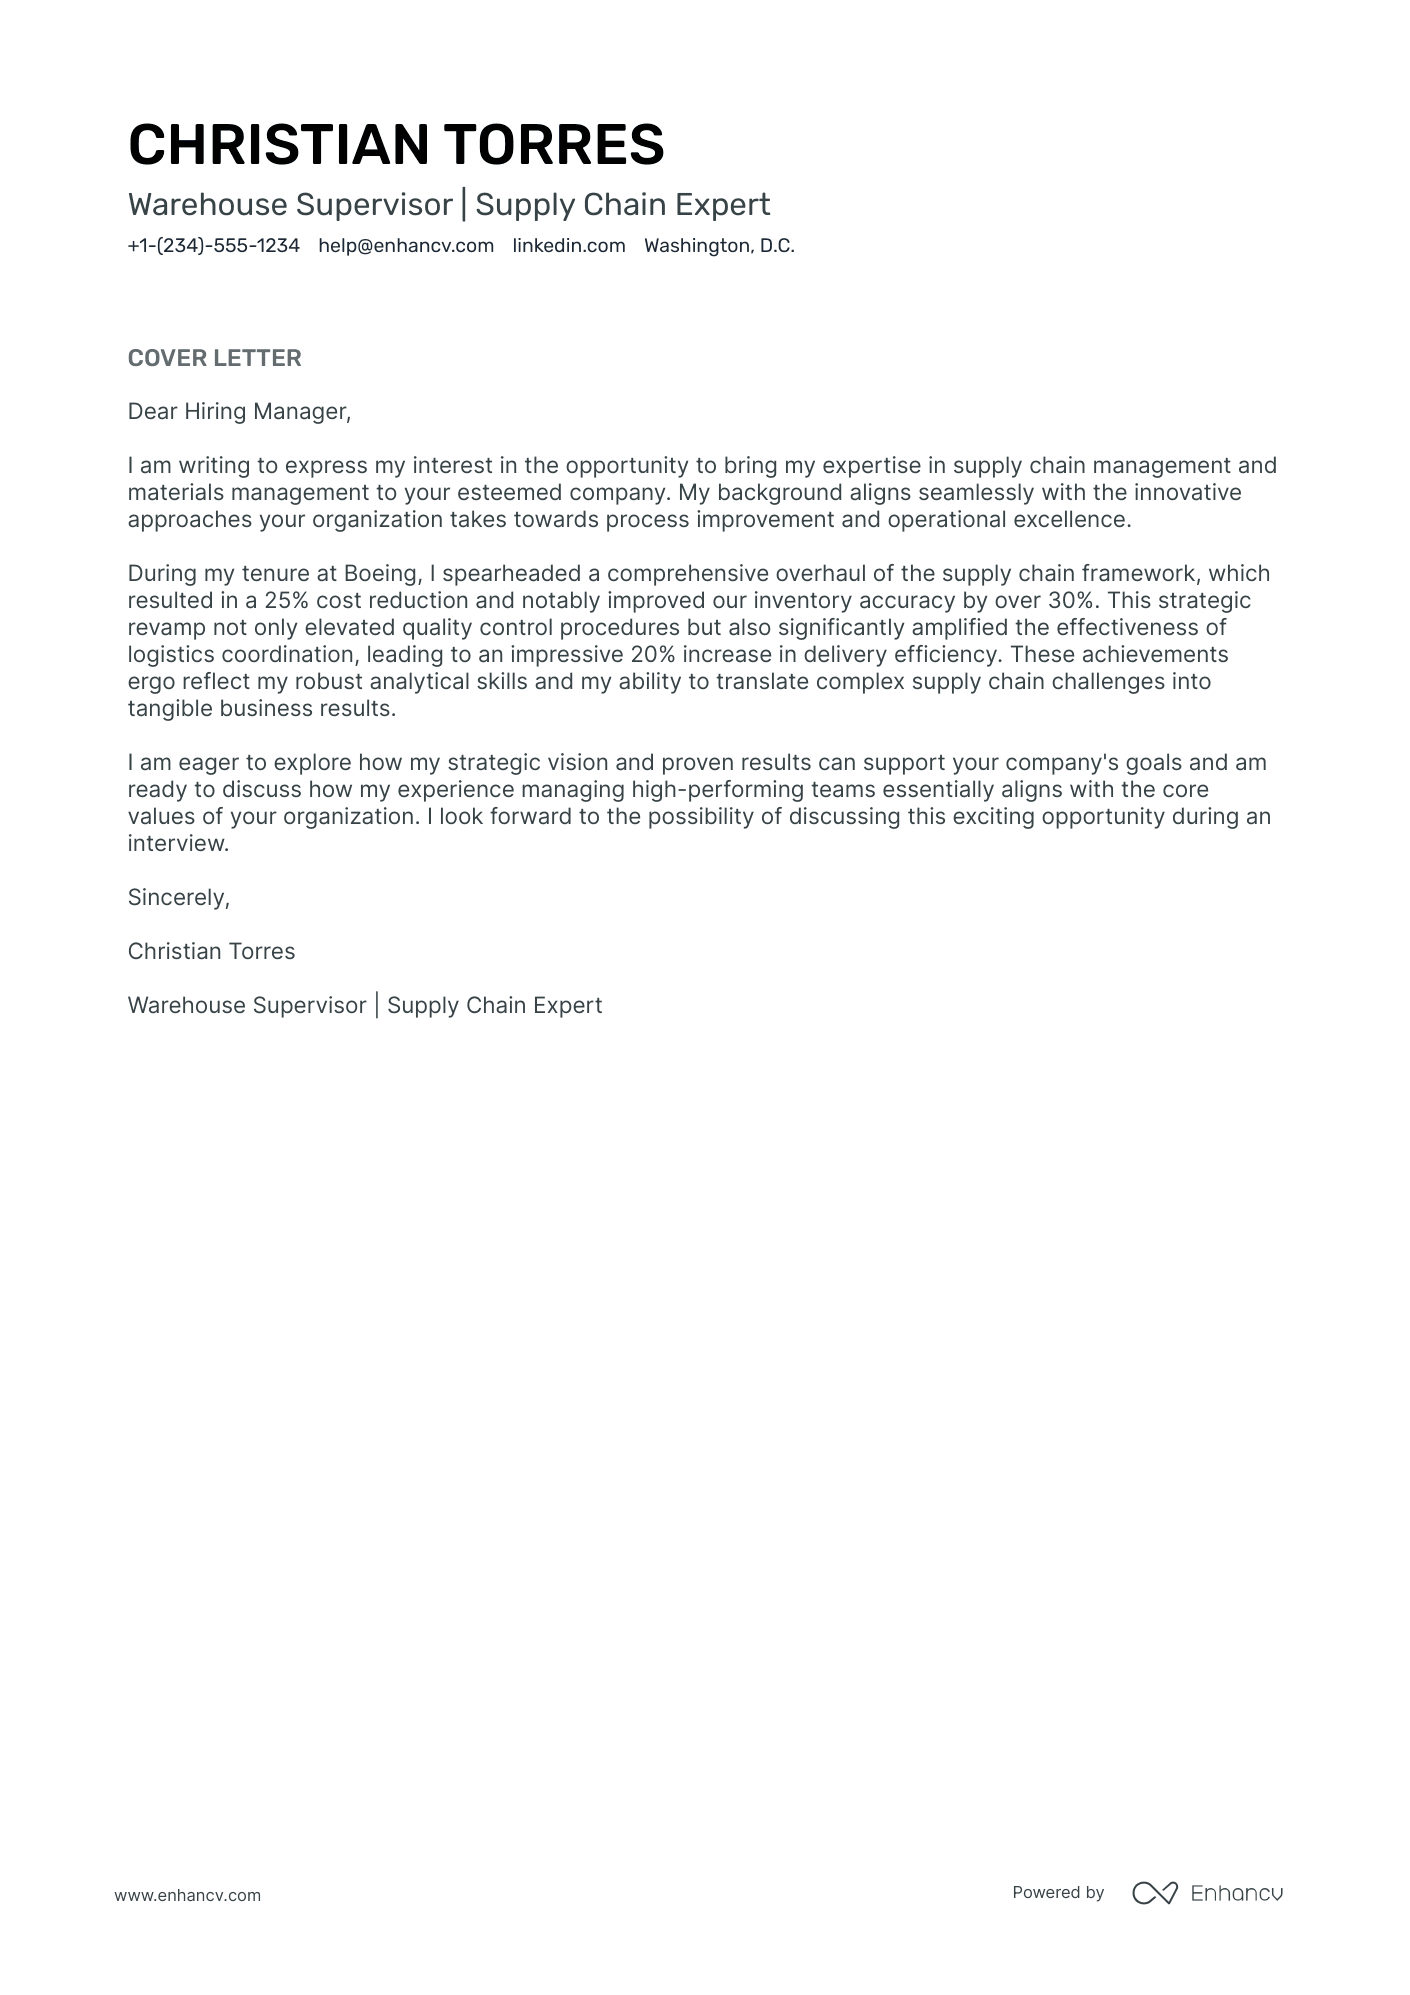 sample cover letter for promotion to supervisor